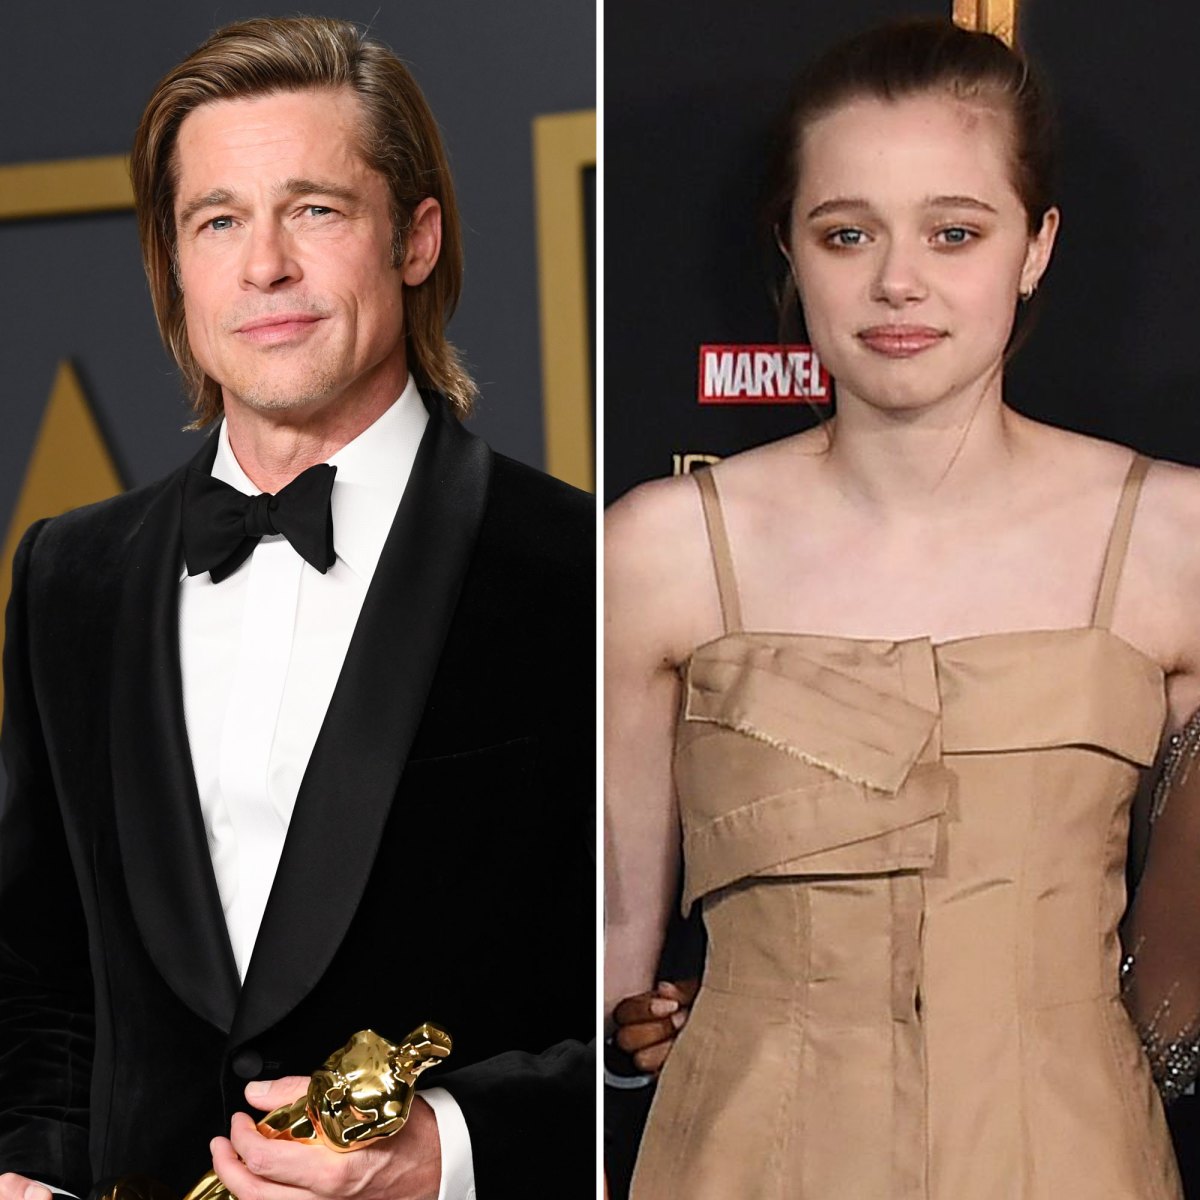 Angelina Jolie & Brad Pitt's daughter Shiloh, 15, looks all grown